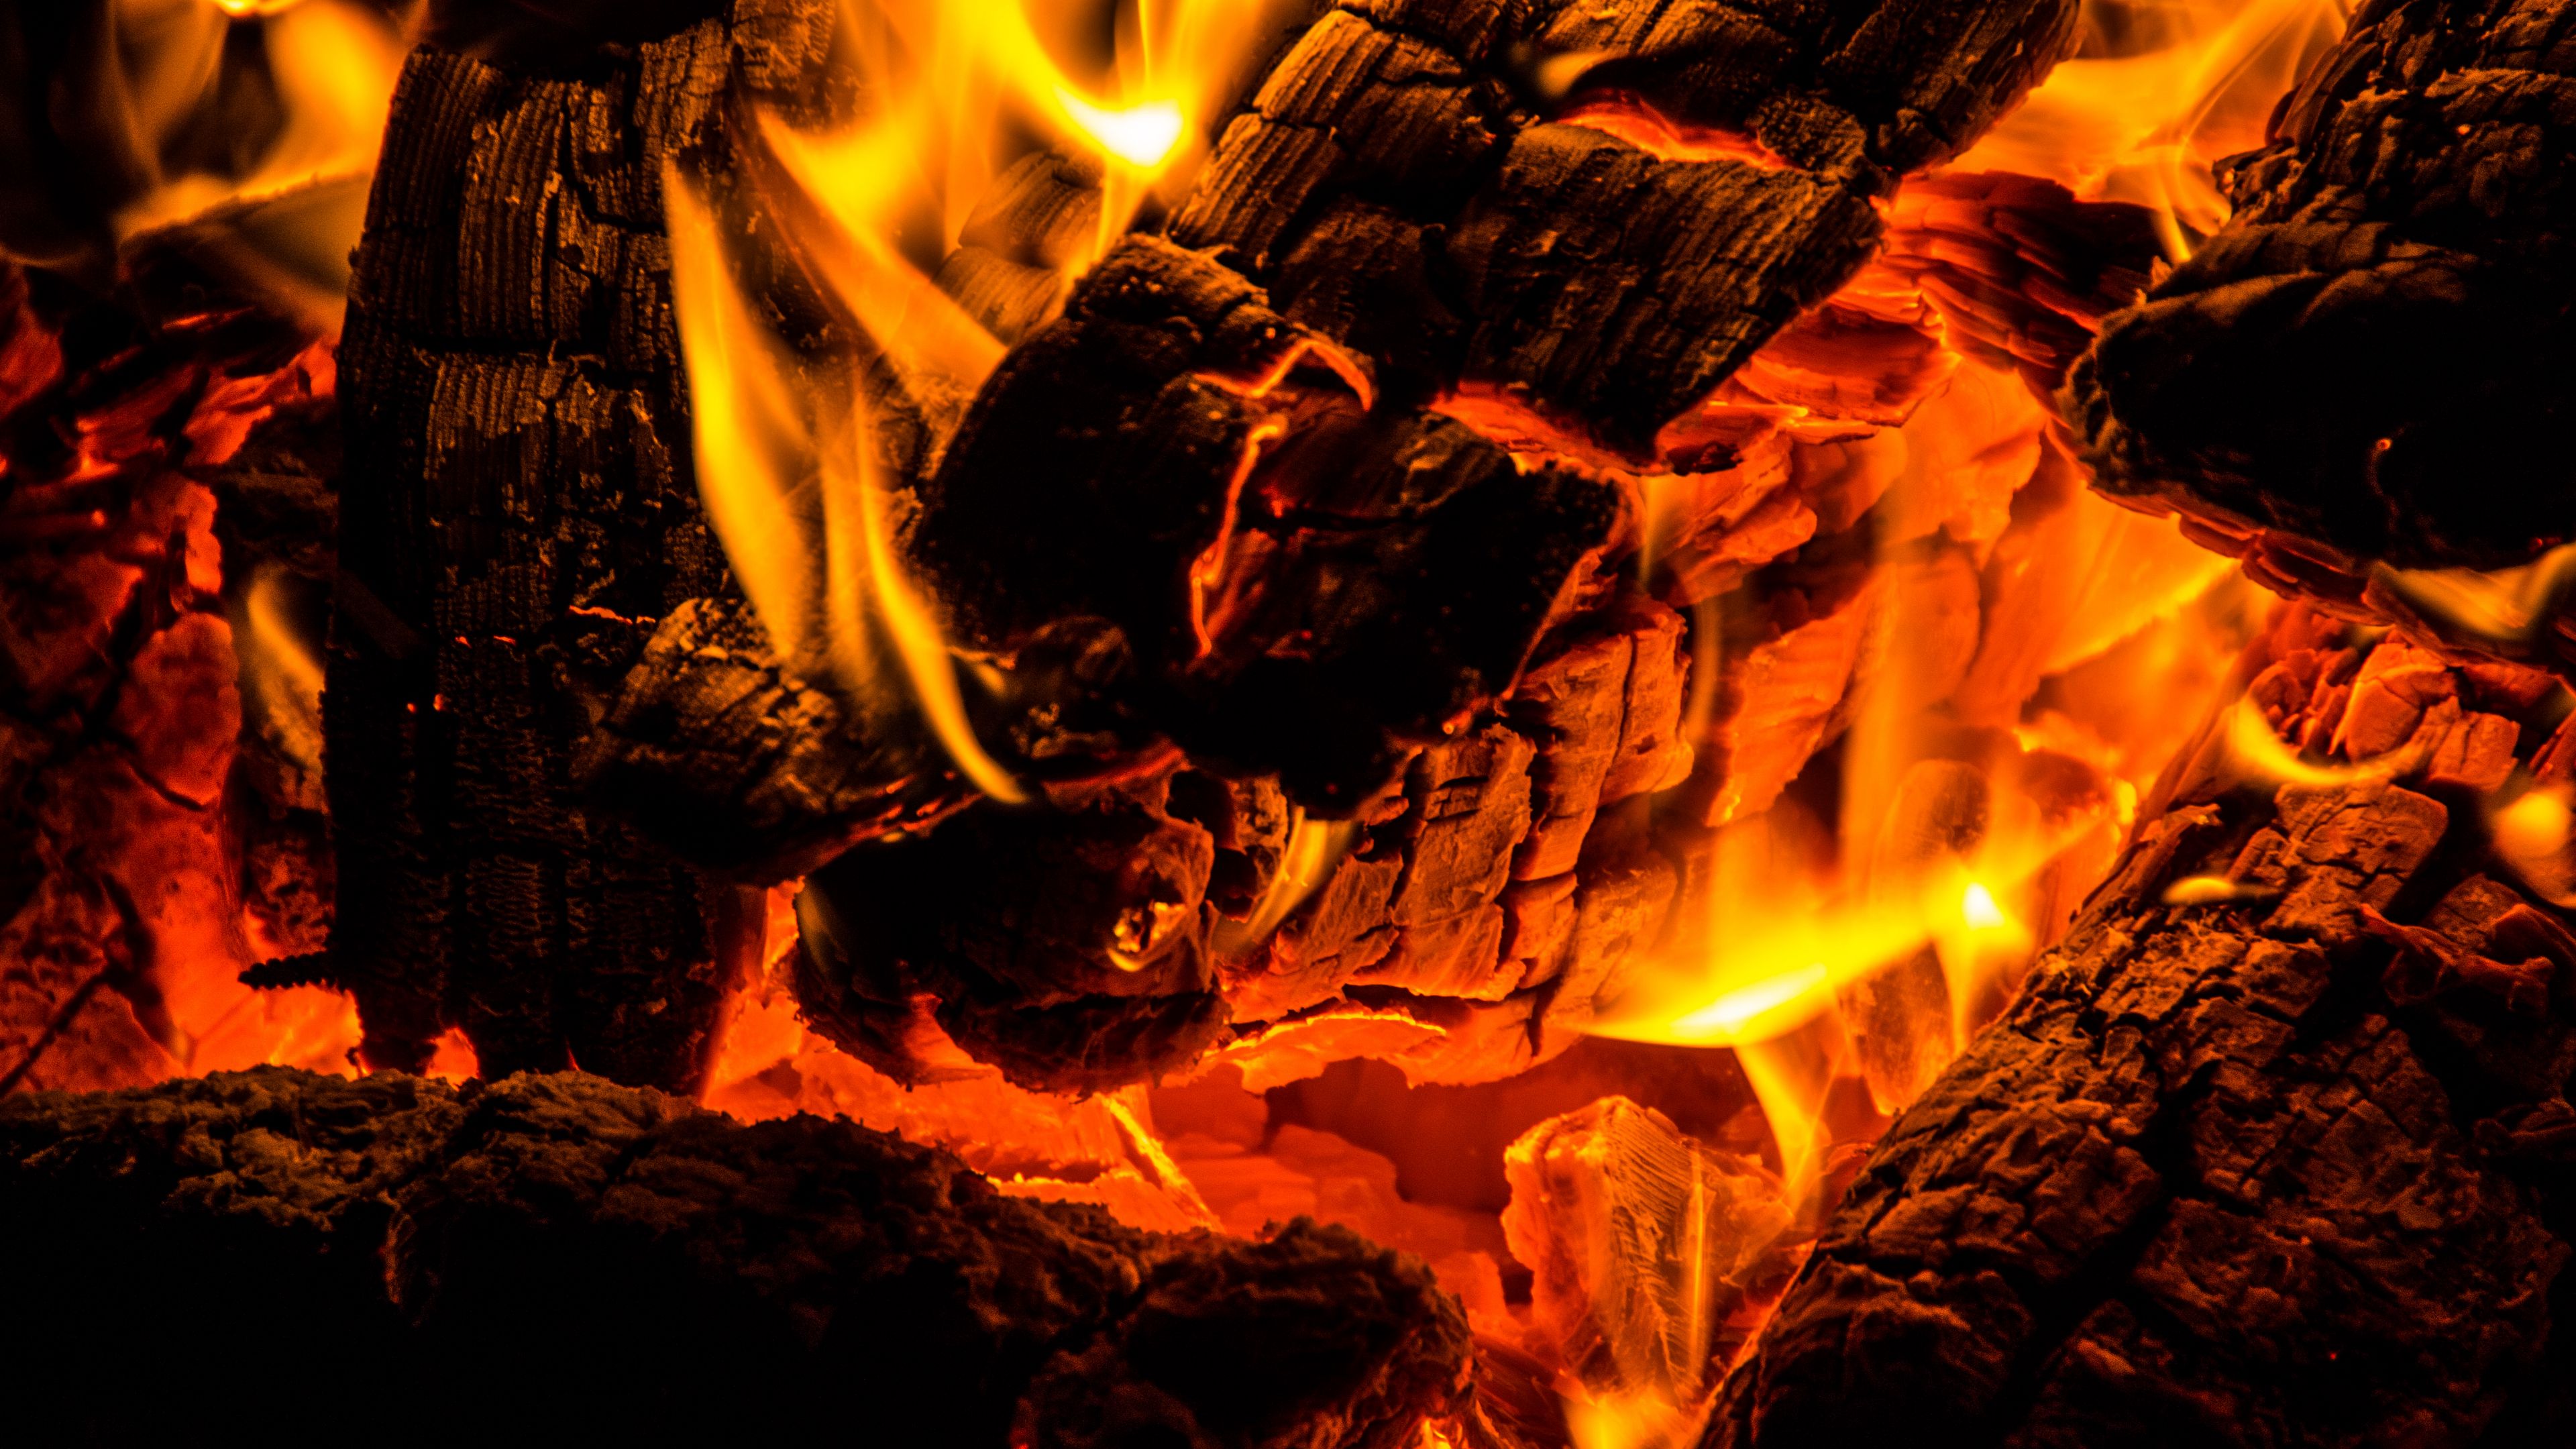 Download wallpaper 3840x2160 fire, embers, flame, bonfire 4k uhd 16:9 HD background